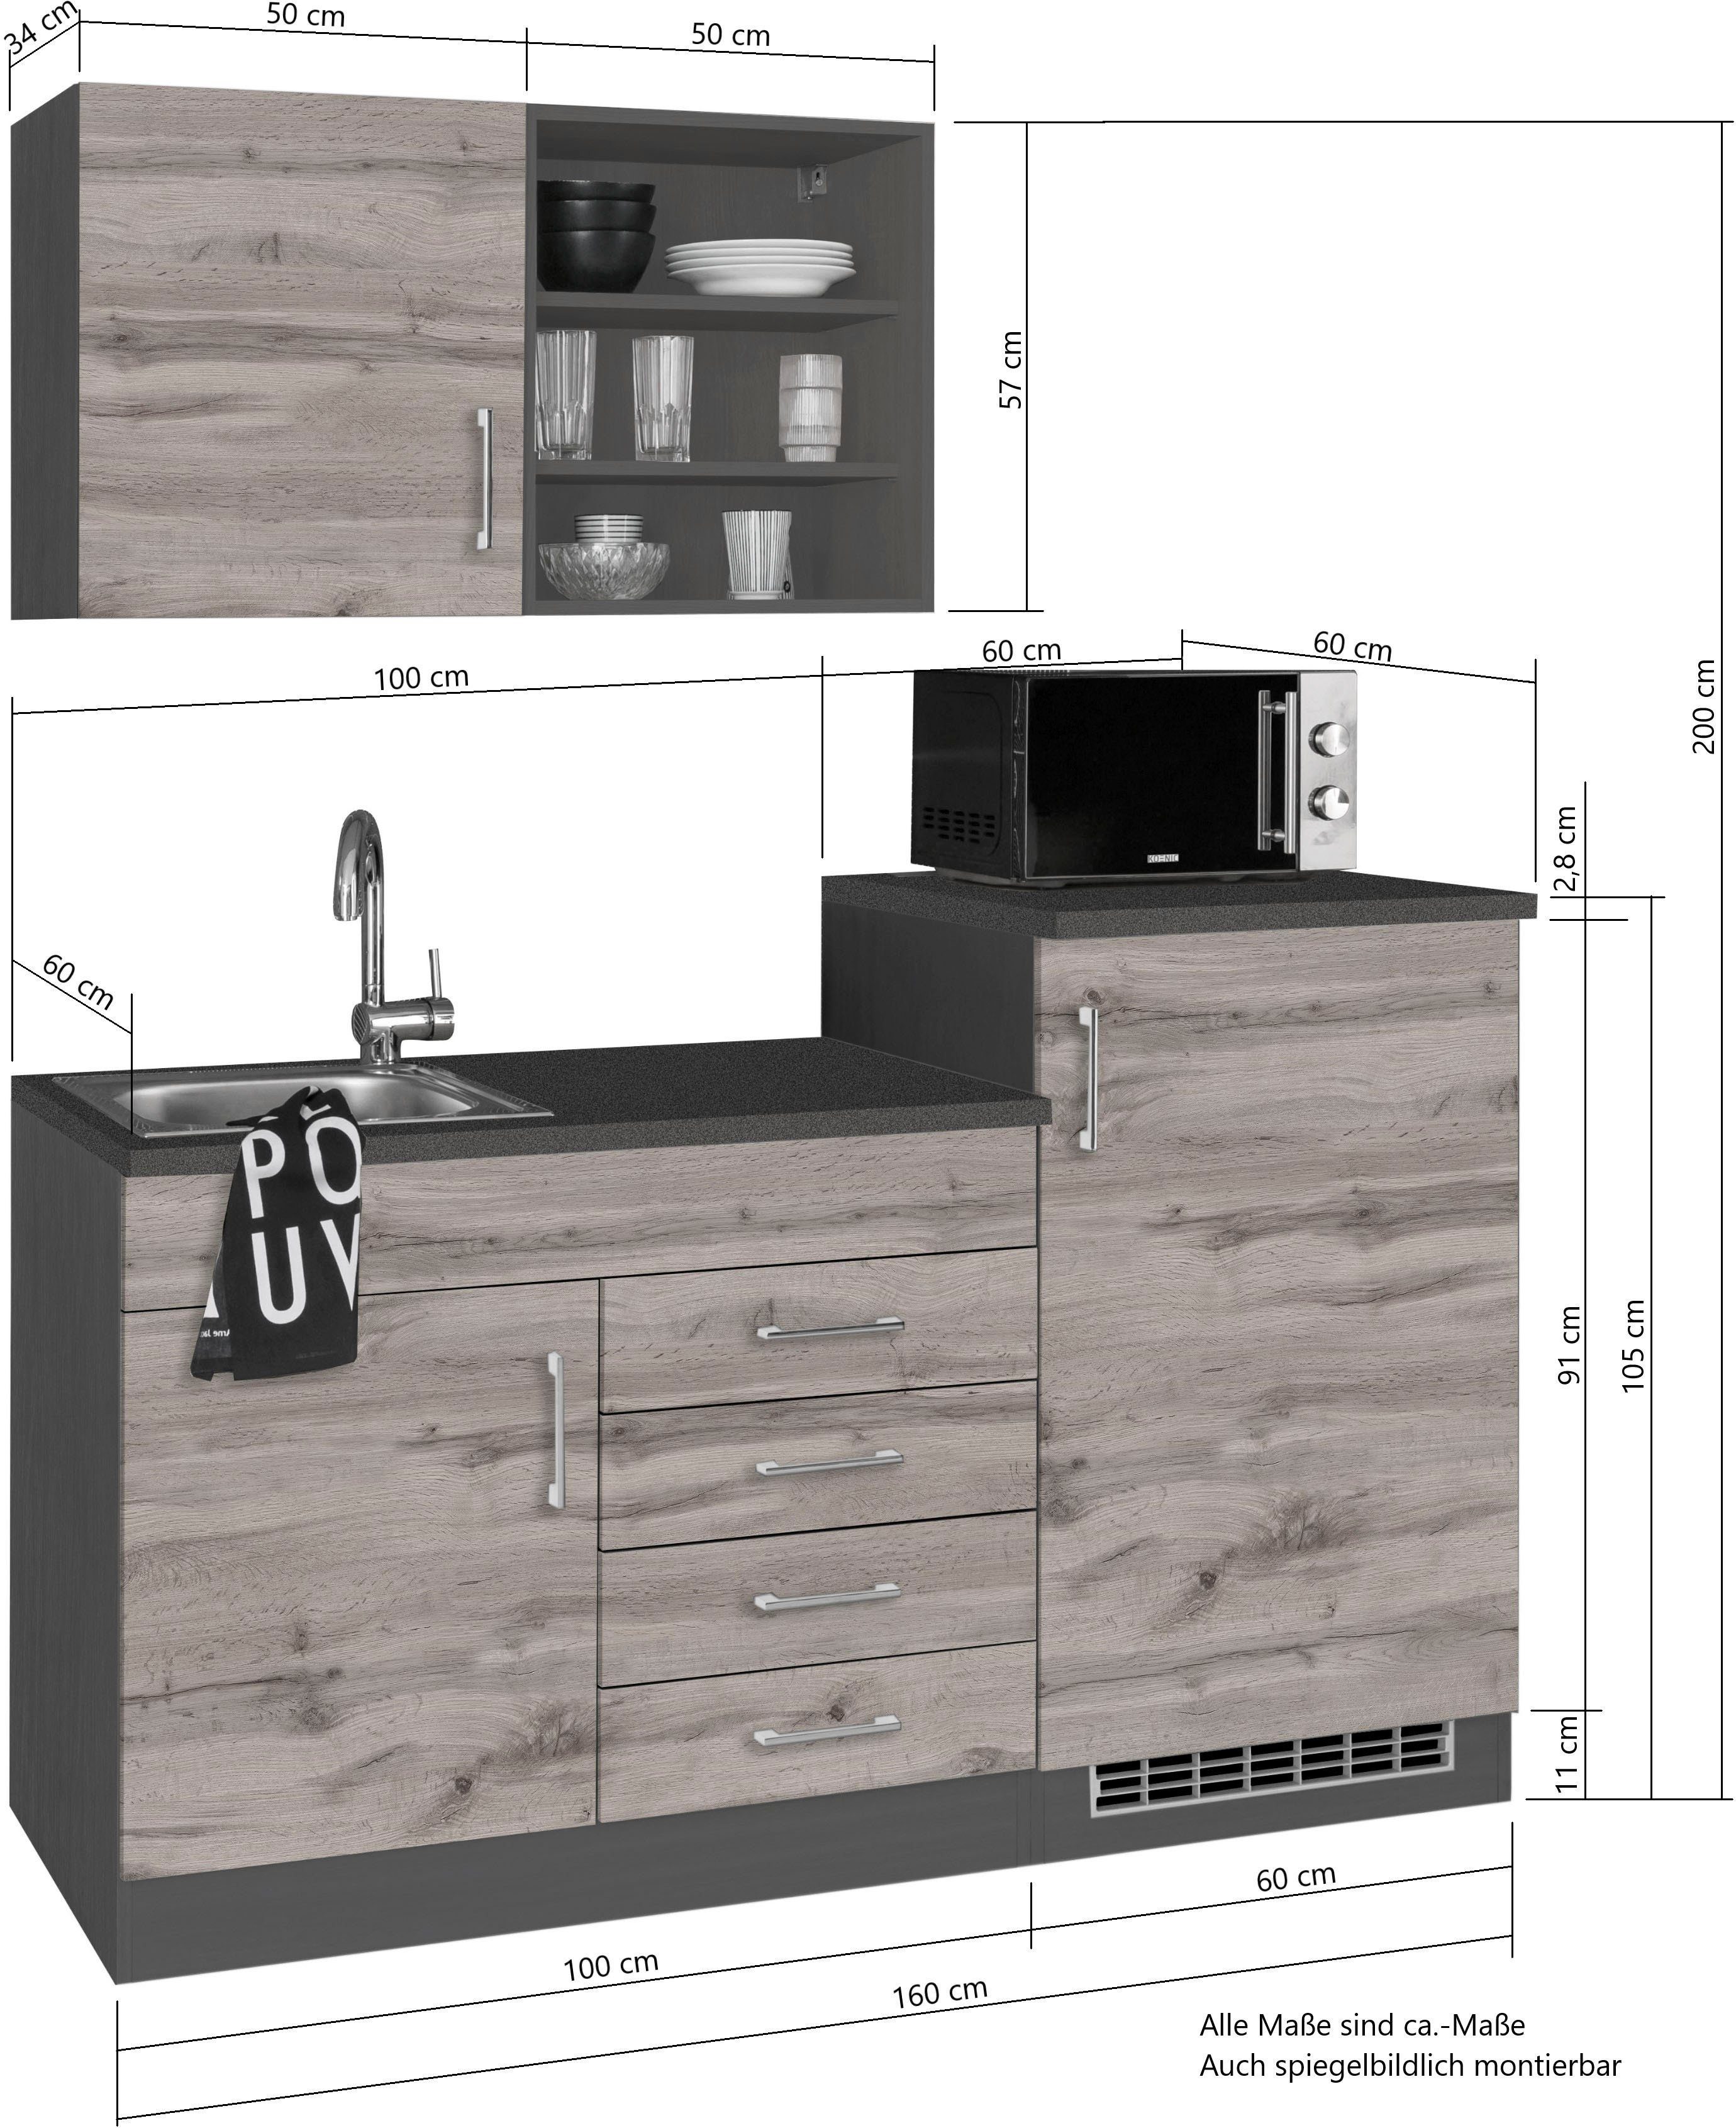 wotaneiche Breite Küche 160 Mali, graphit E-Geräten | HELD | graphit/graphit-wotaneiche cm, mit MÖBEL